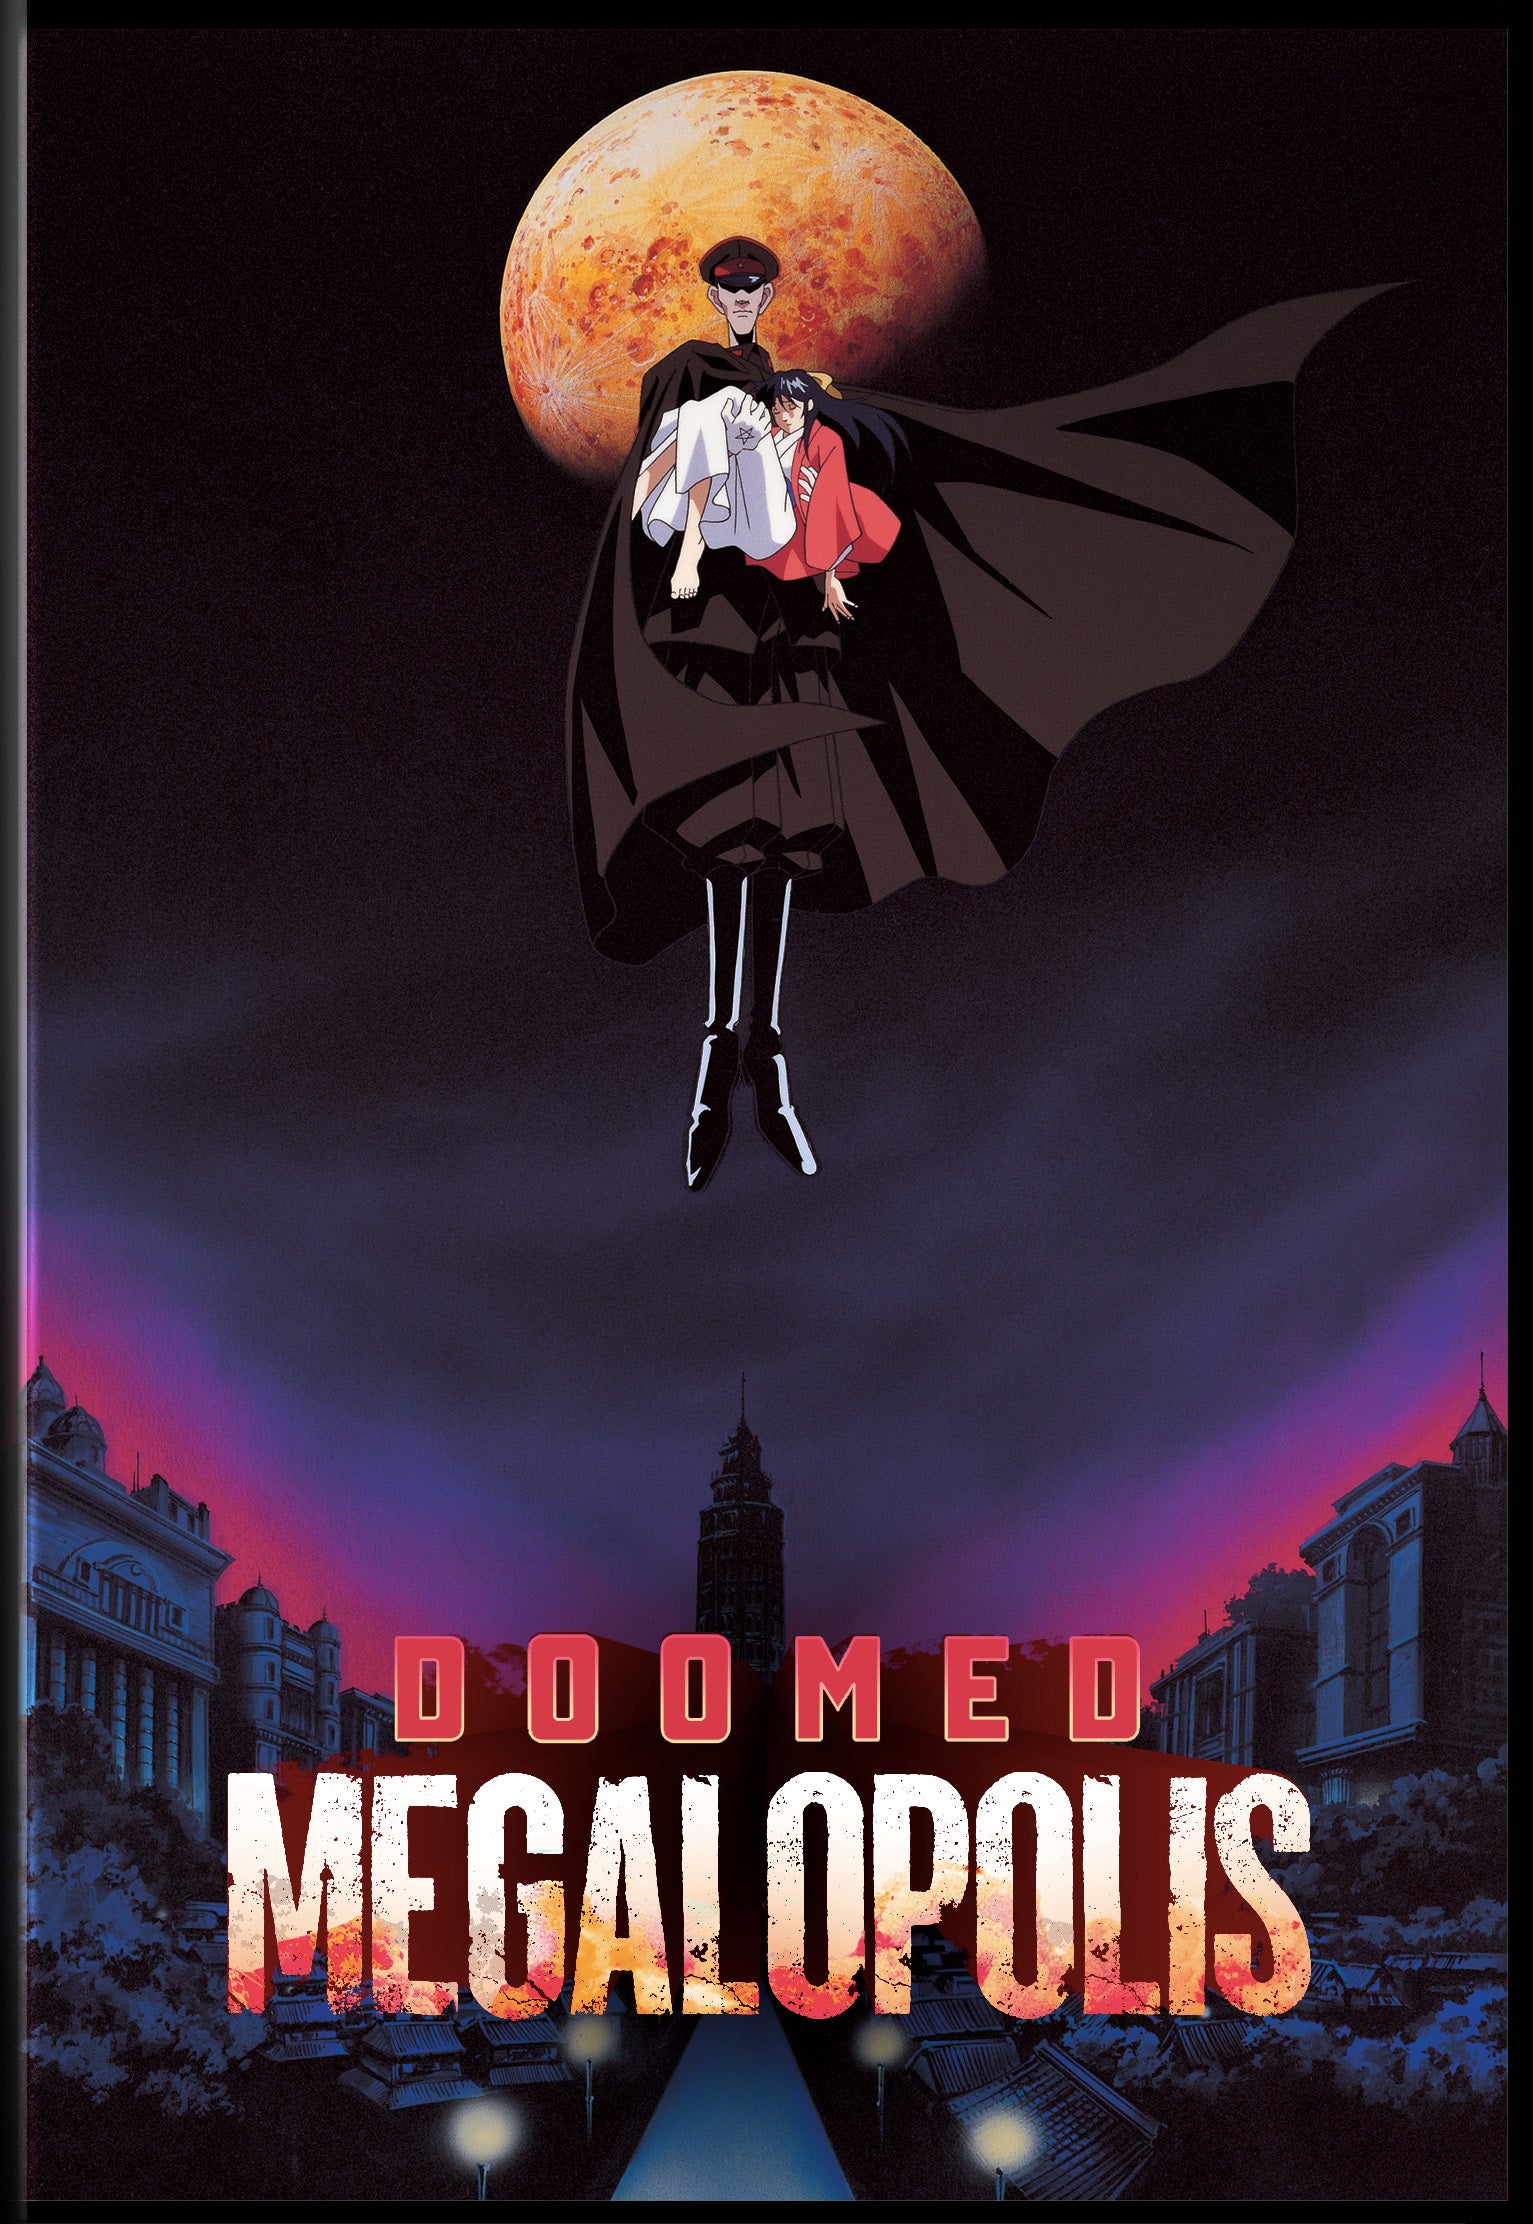 DOOMED MEGALOPOLIS, The Creepiest Scenes, 1991